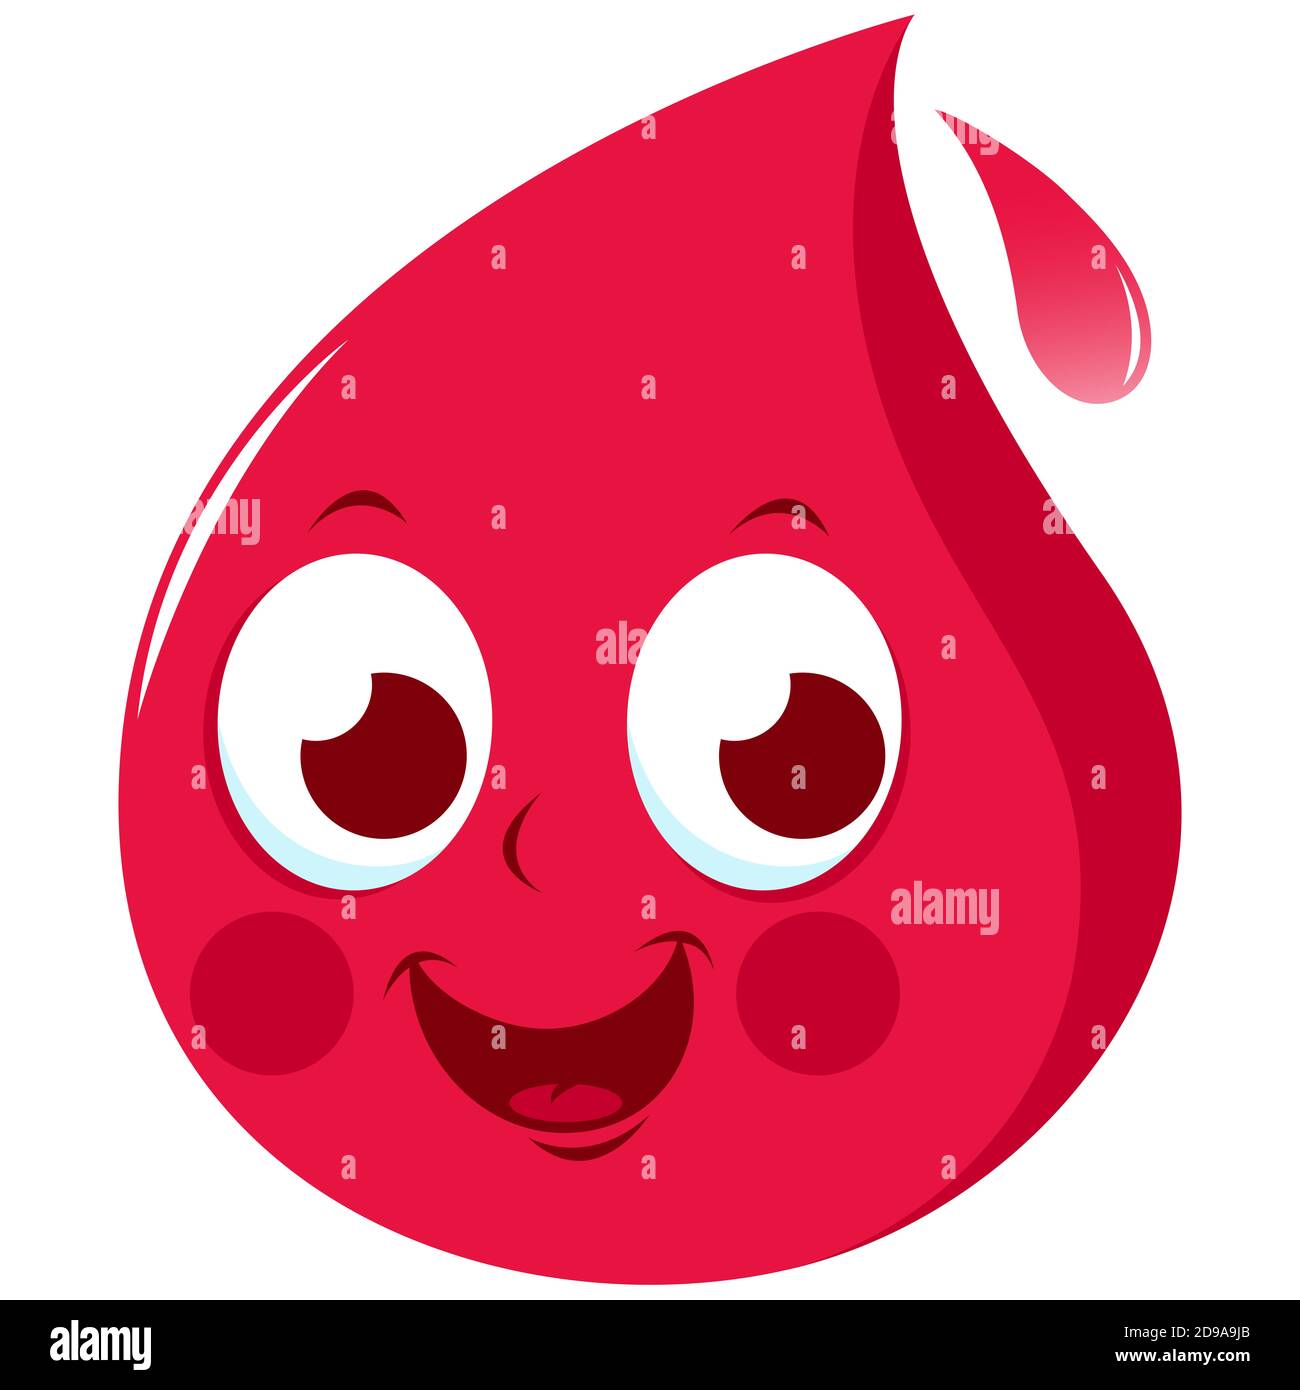 Lindo gota de sangre de dibujos animados. Carácter del concepto de donación de sangre. Foto de stock